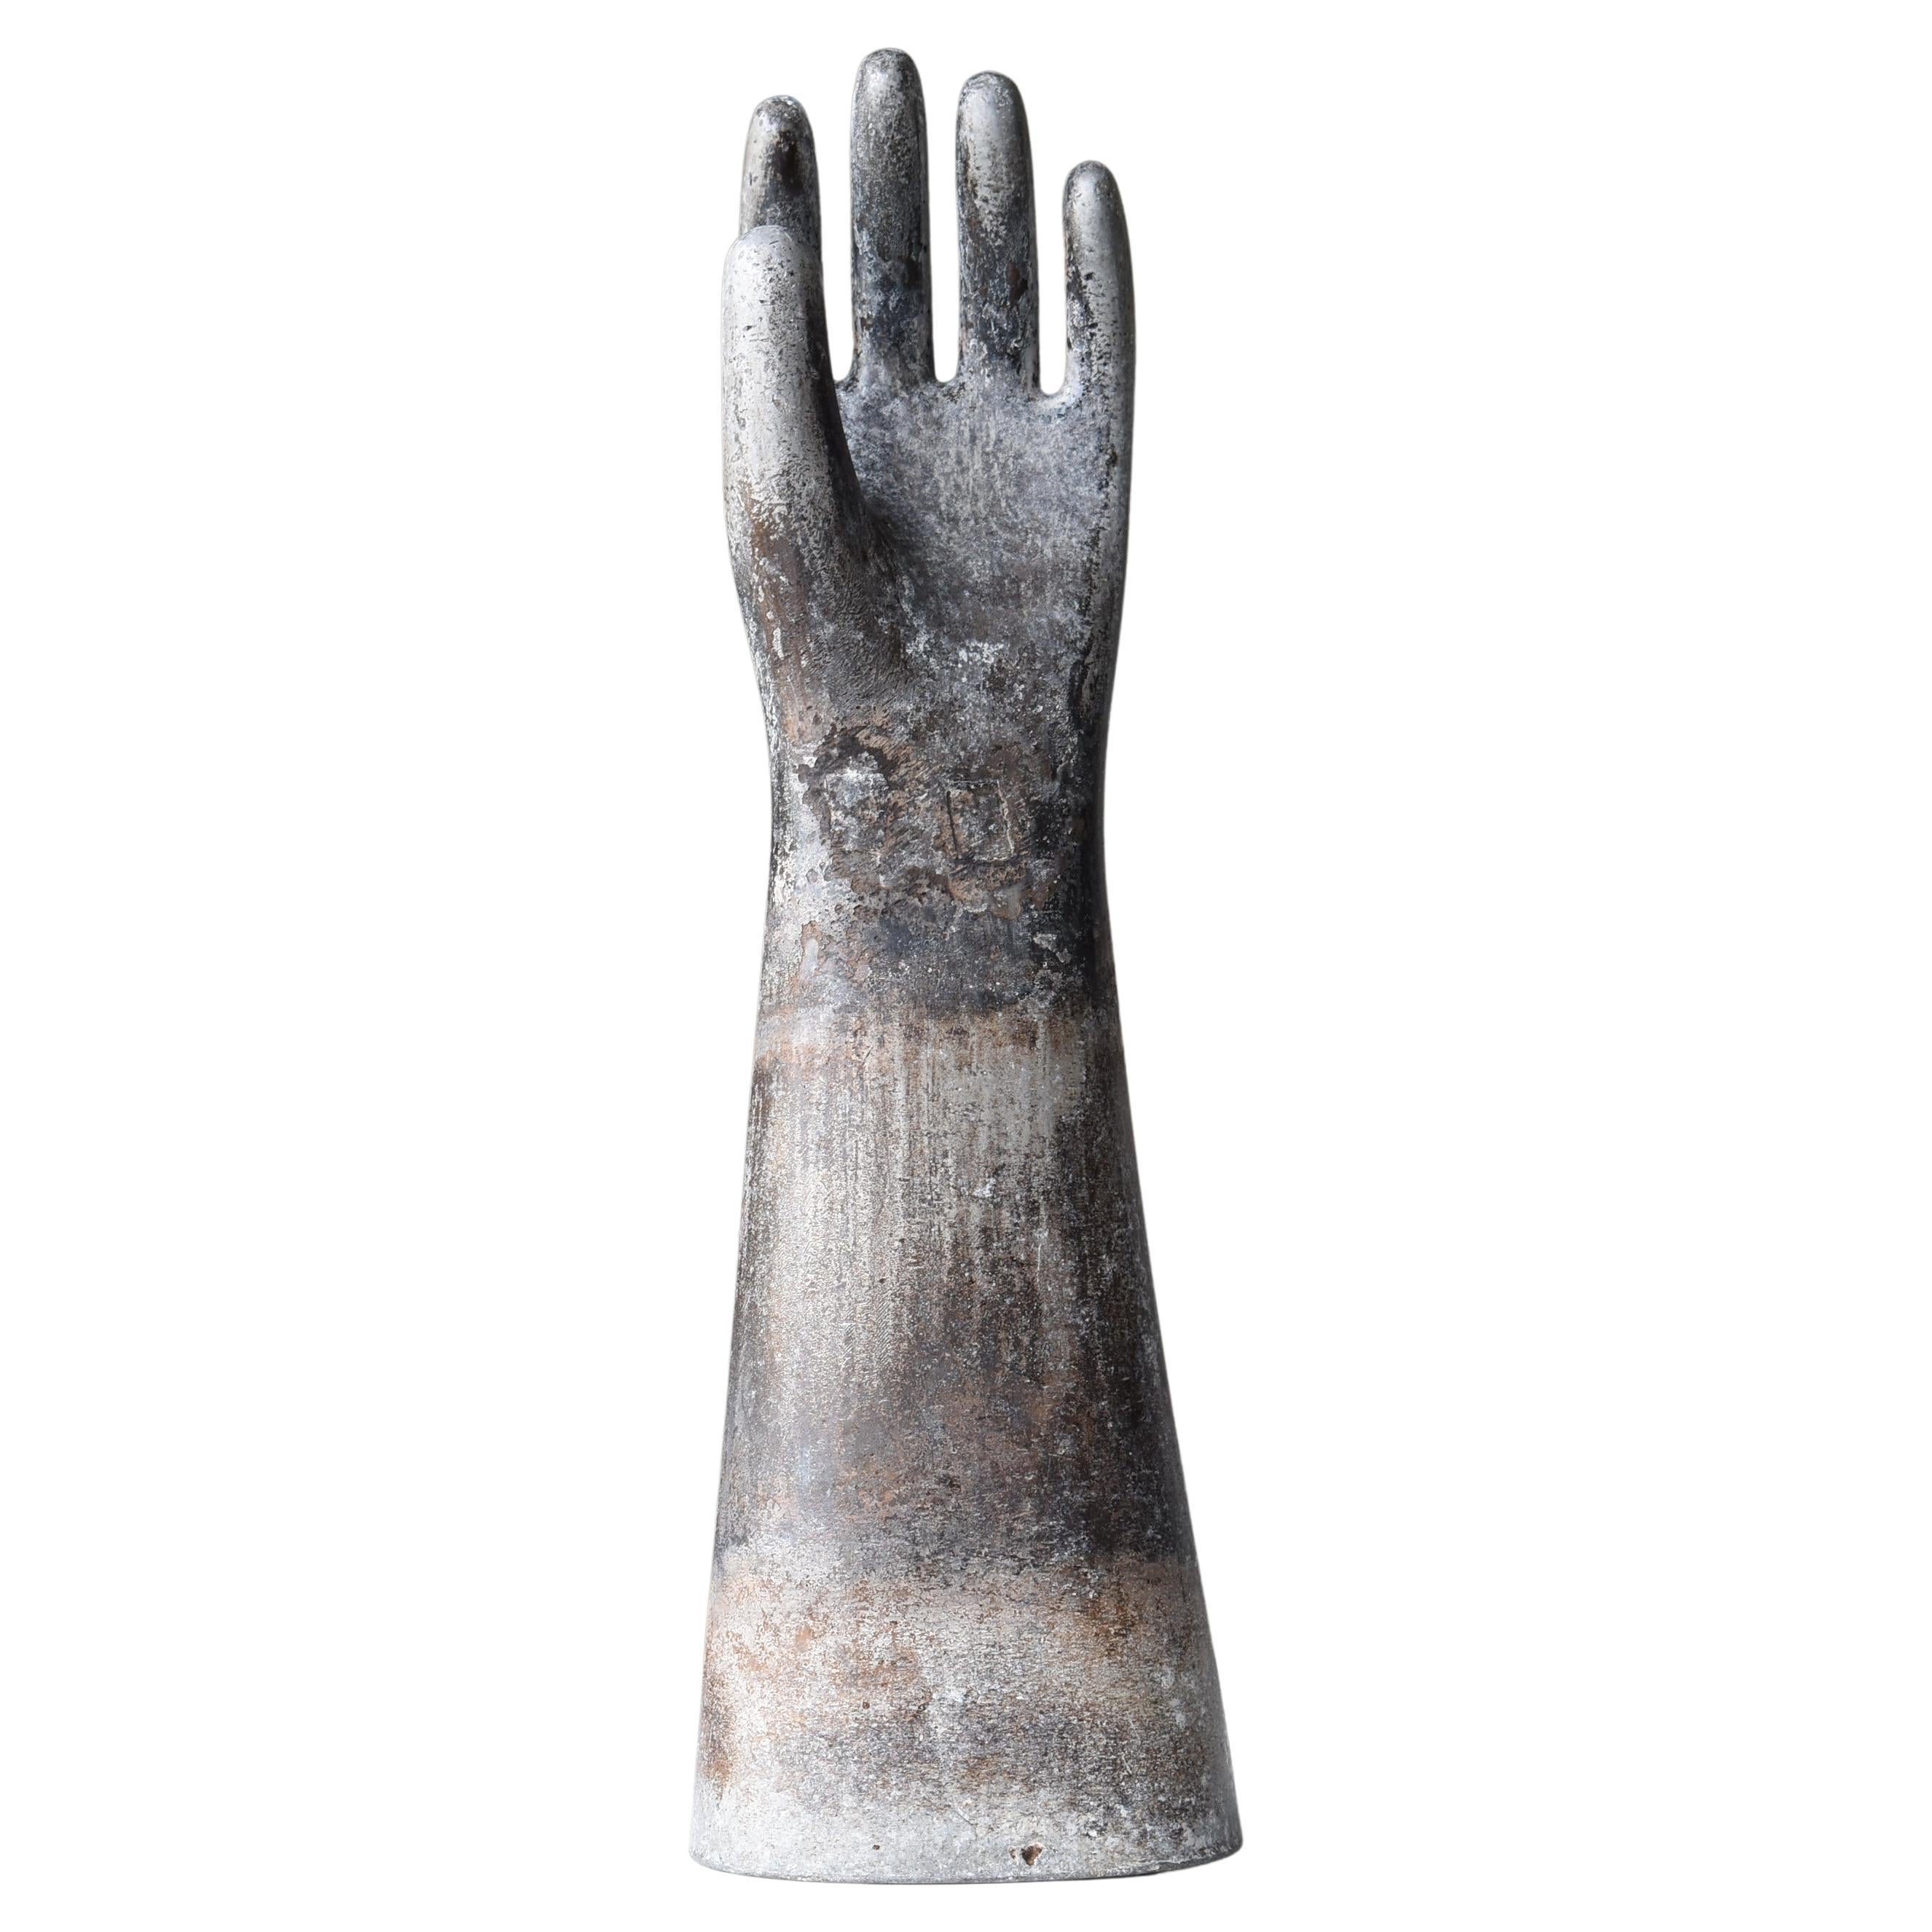 Japanese Antique Aluminum Glove Mold 1920s-1940s / Figurine Object Wabi Sabi For Sale